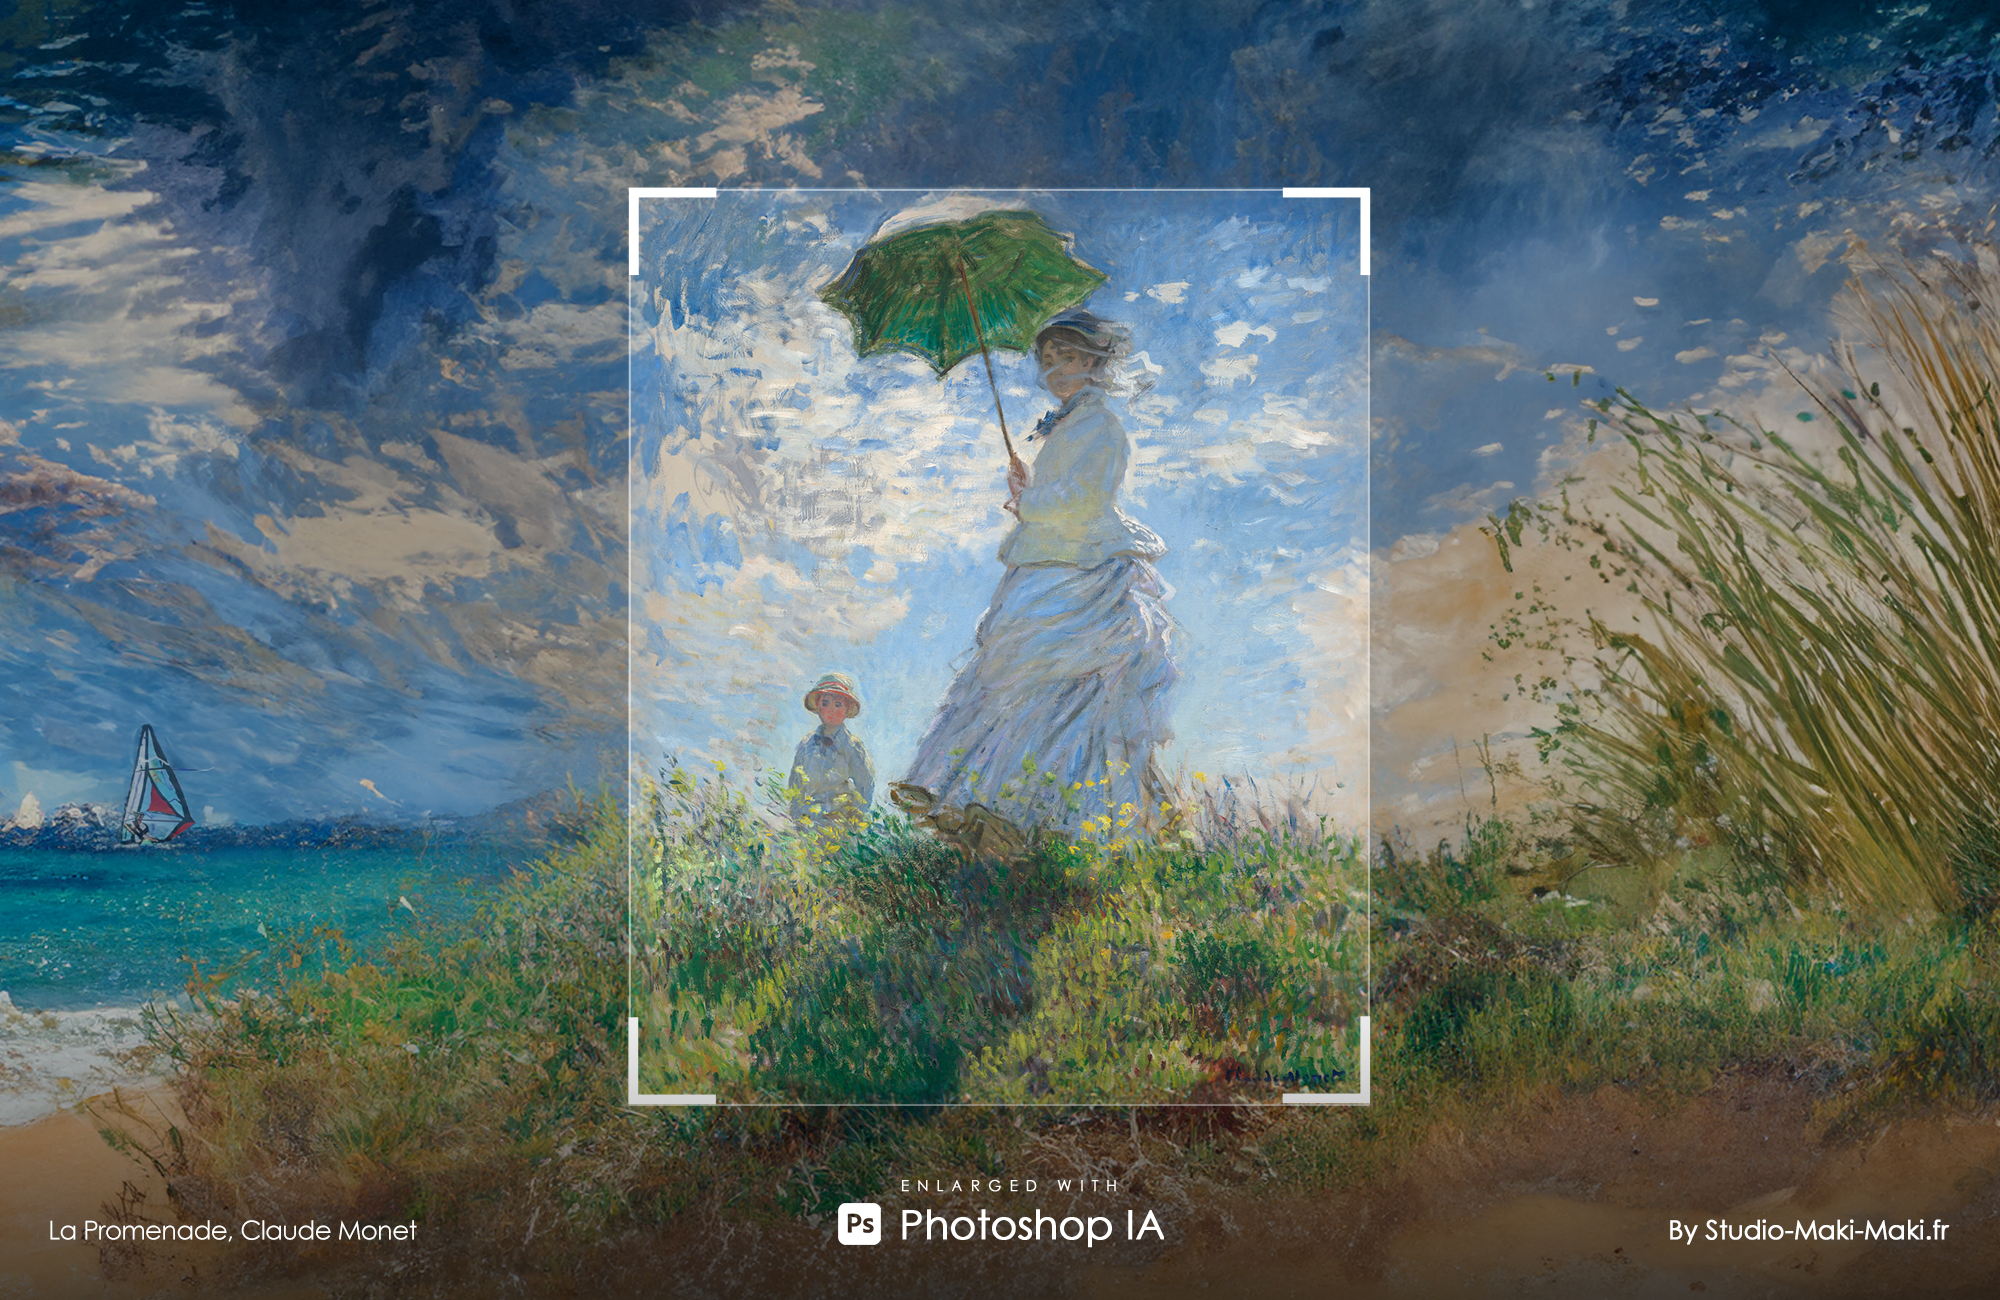 La Promenade, Claude Monet - Enlarged with Photoshop IA - By Studio Maki Maki